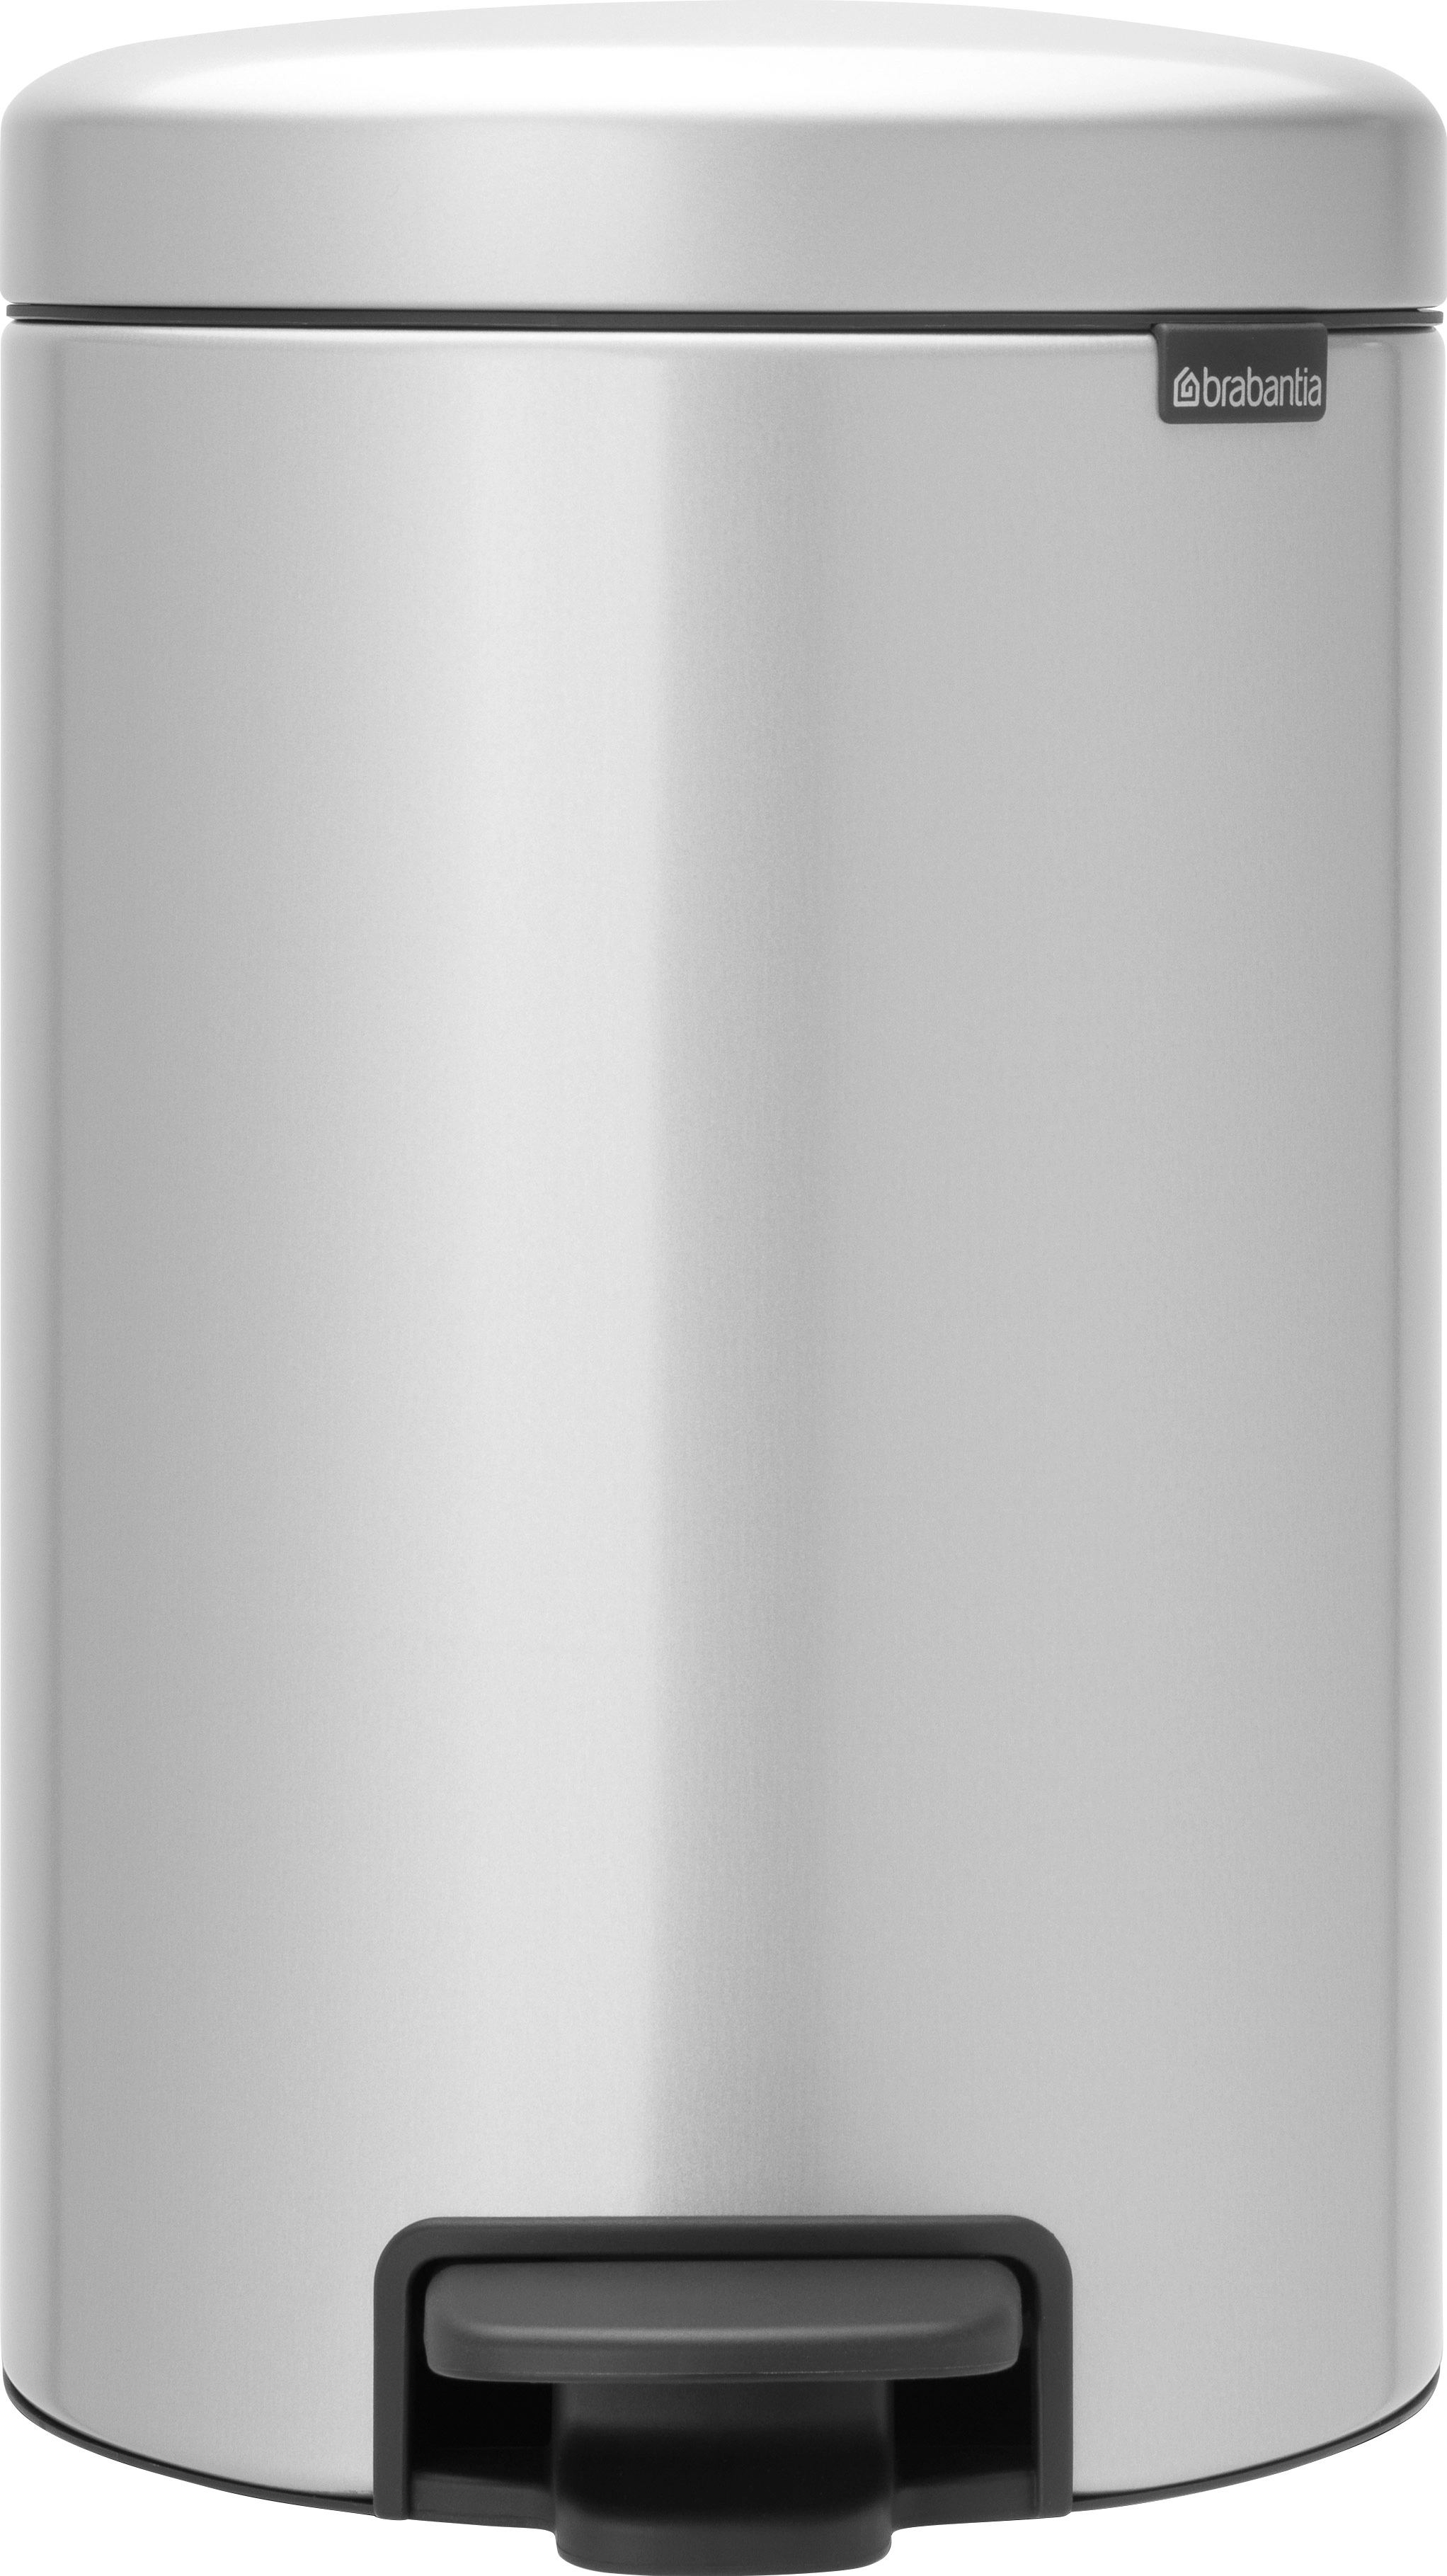 Brabantia Mülleimer Sort & Go stapelbar Light Grey 20 l kaufen bei OBI